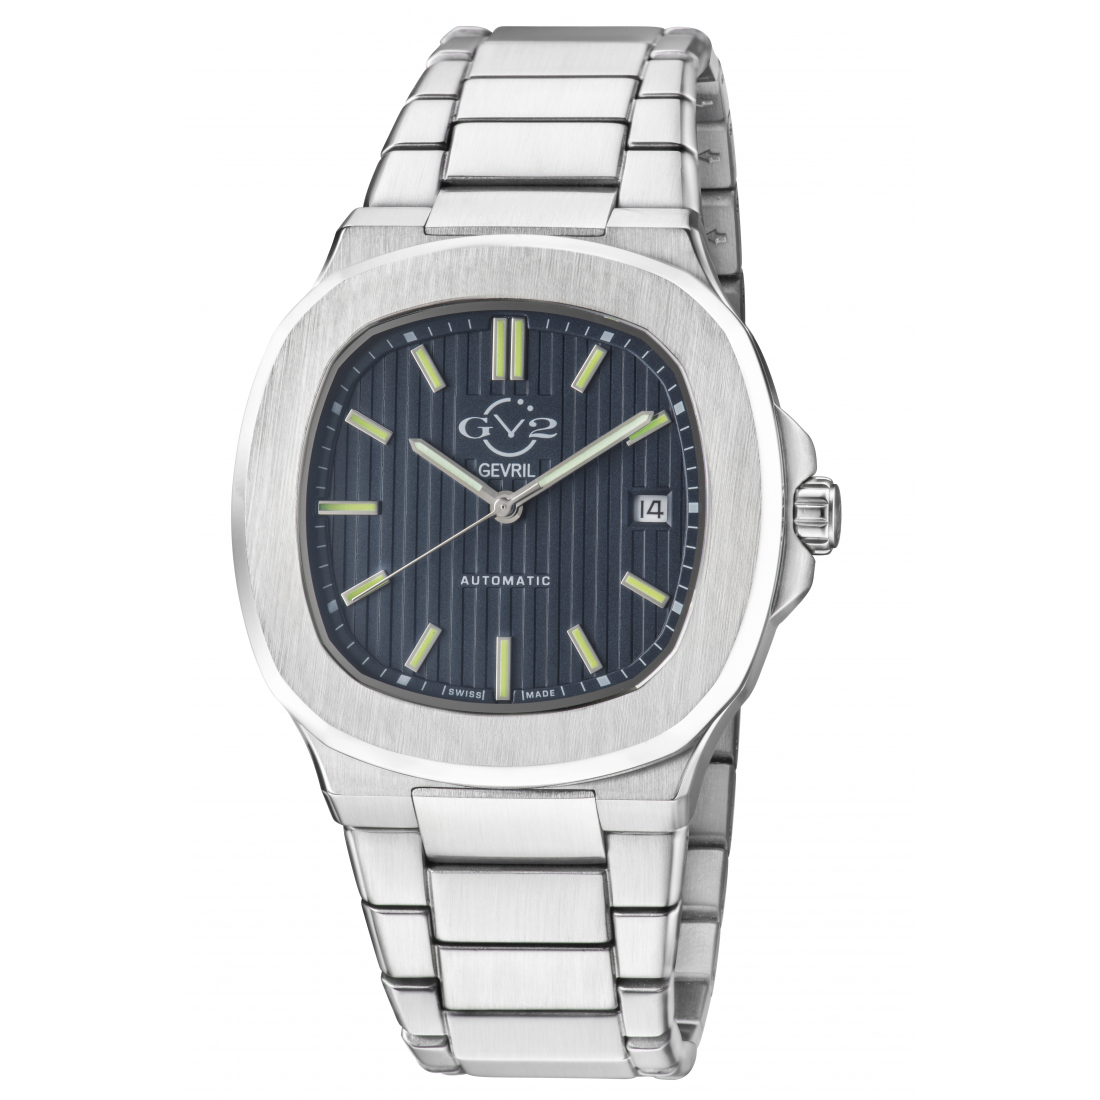 GV2 Automatic Men's Potente Blue Dial Stainless Steel Bracelet Watch